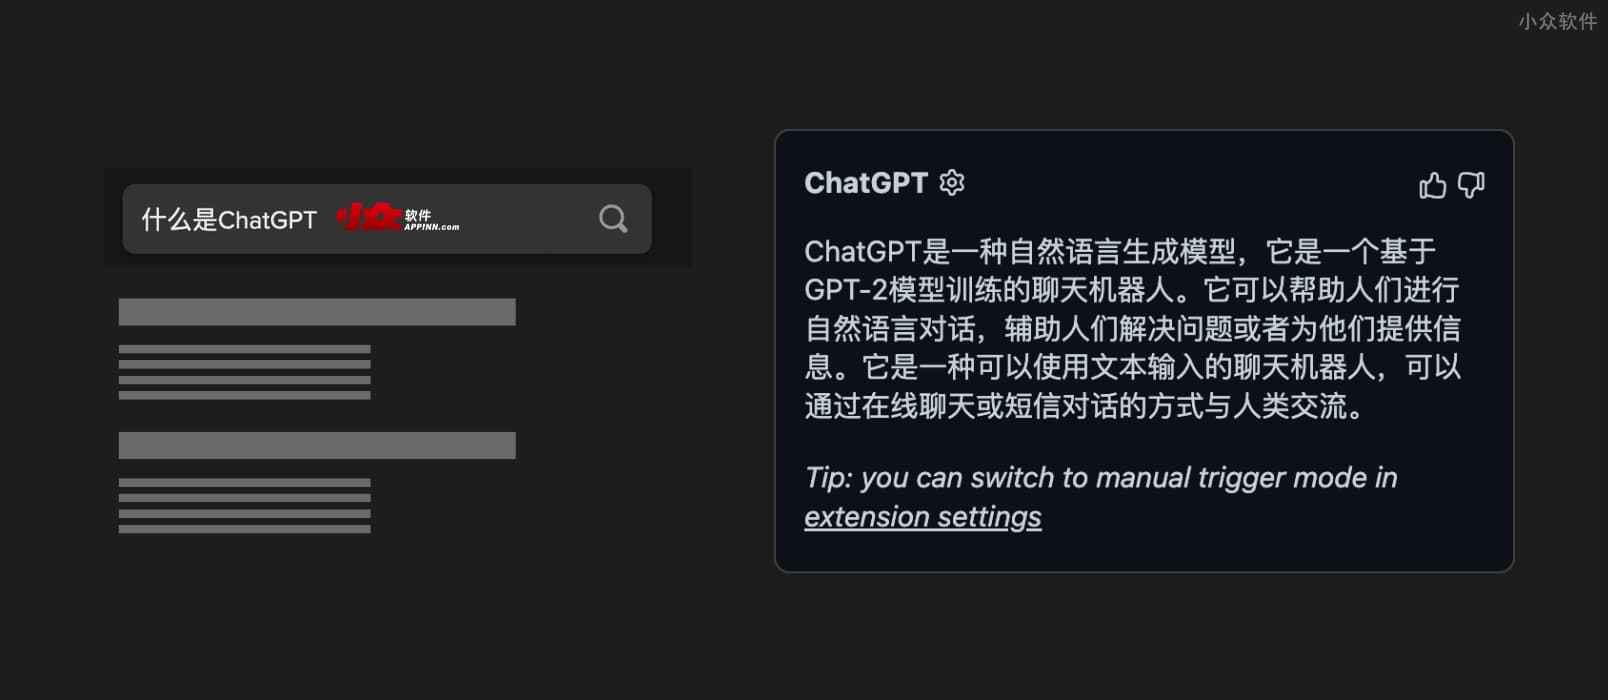 ChatGPT for Google – 在 10 大搜索引擎结果旁边显示 ChatGPT 结果，支持 Google、百度、Bing、DuckDuckGo 等[Chrome/Firefox